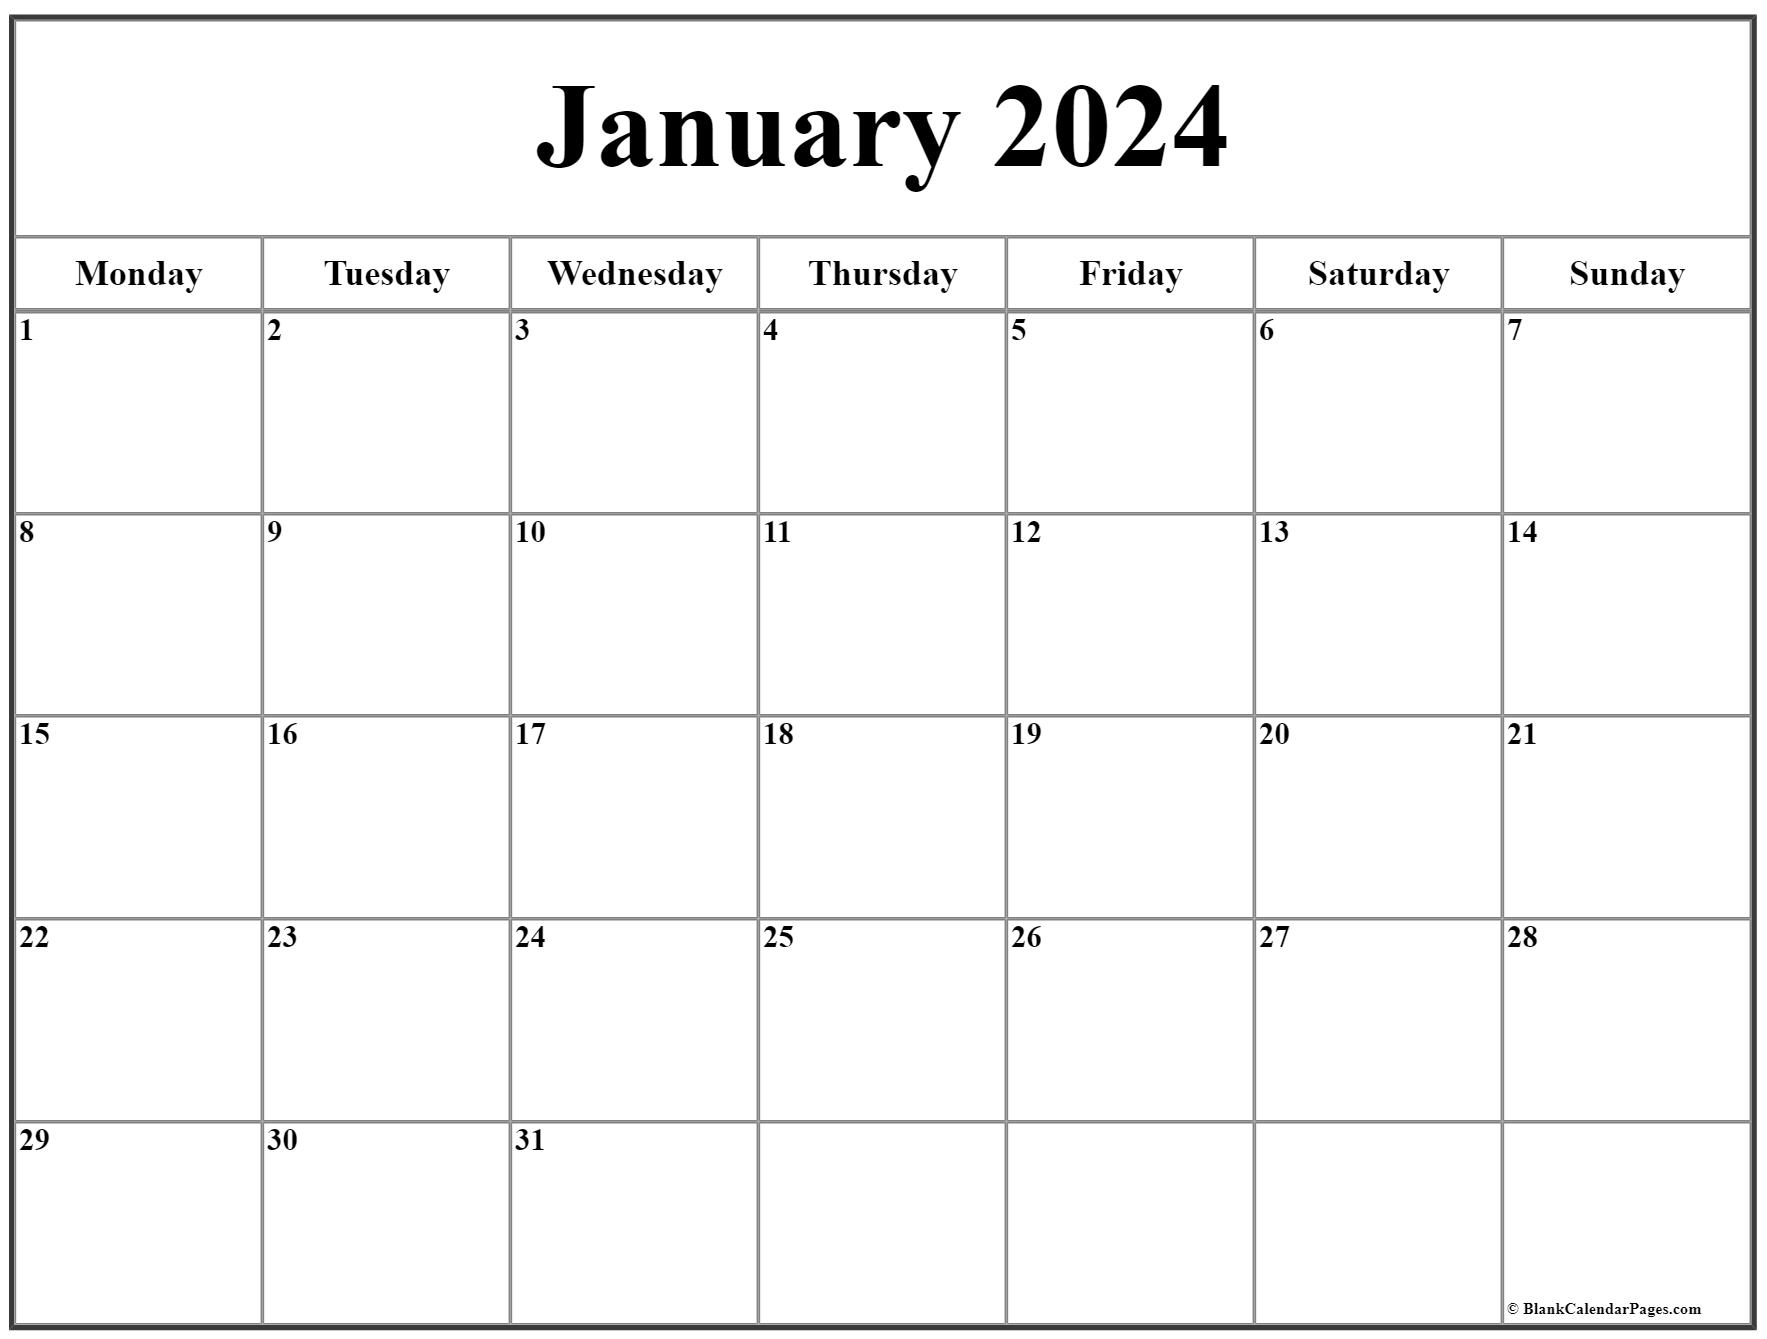 January 2024 Monday Calendar | Monday to Sunday